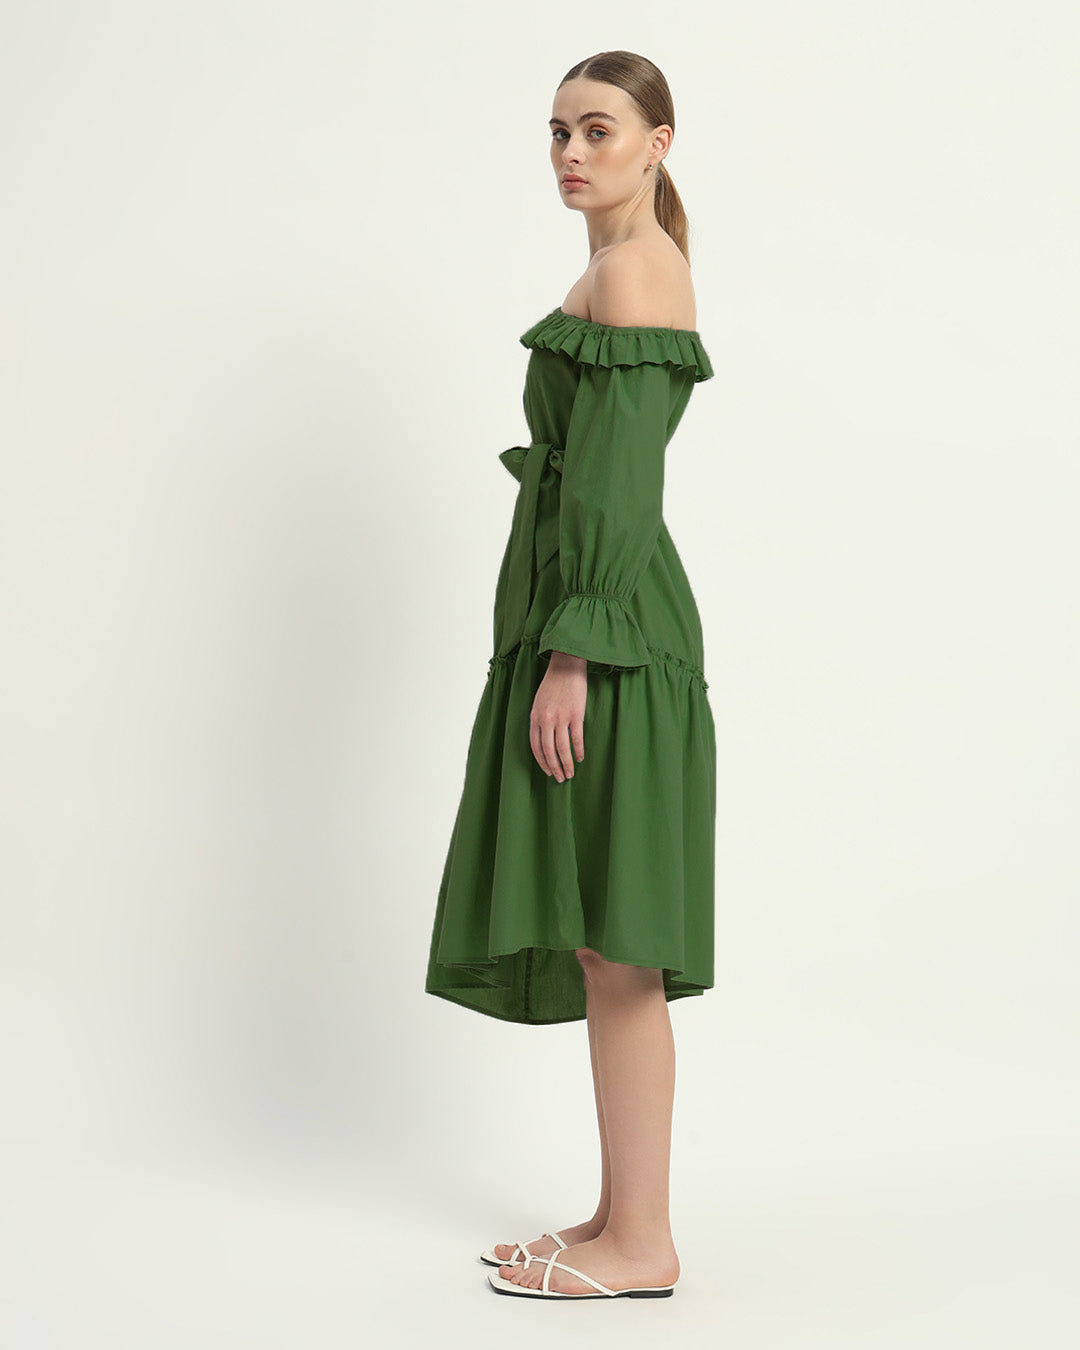 The Stellata Emerald Cotton Dress